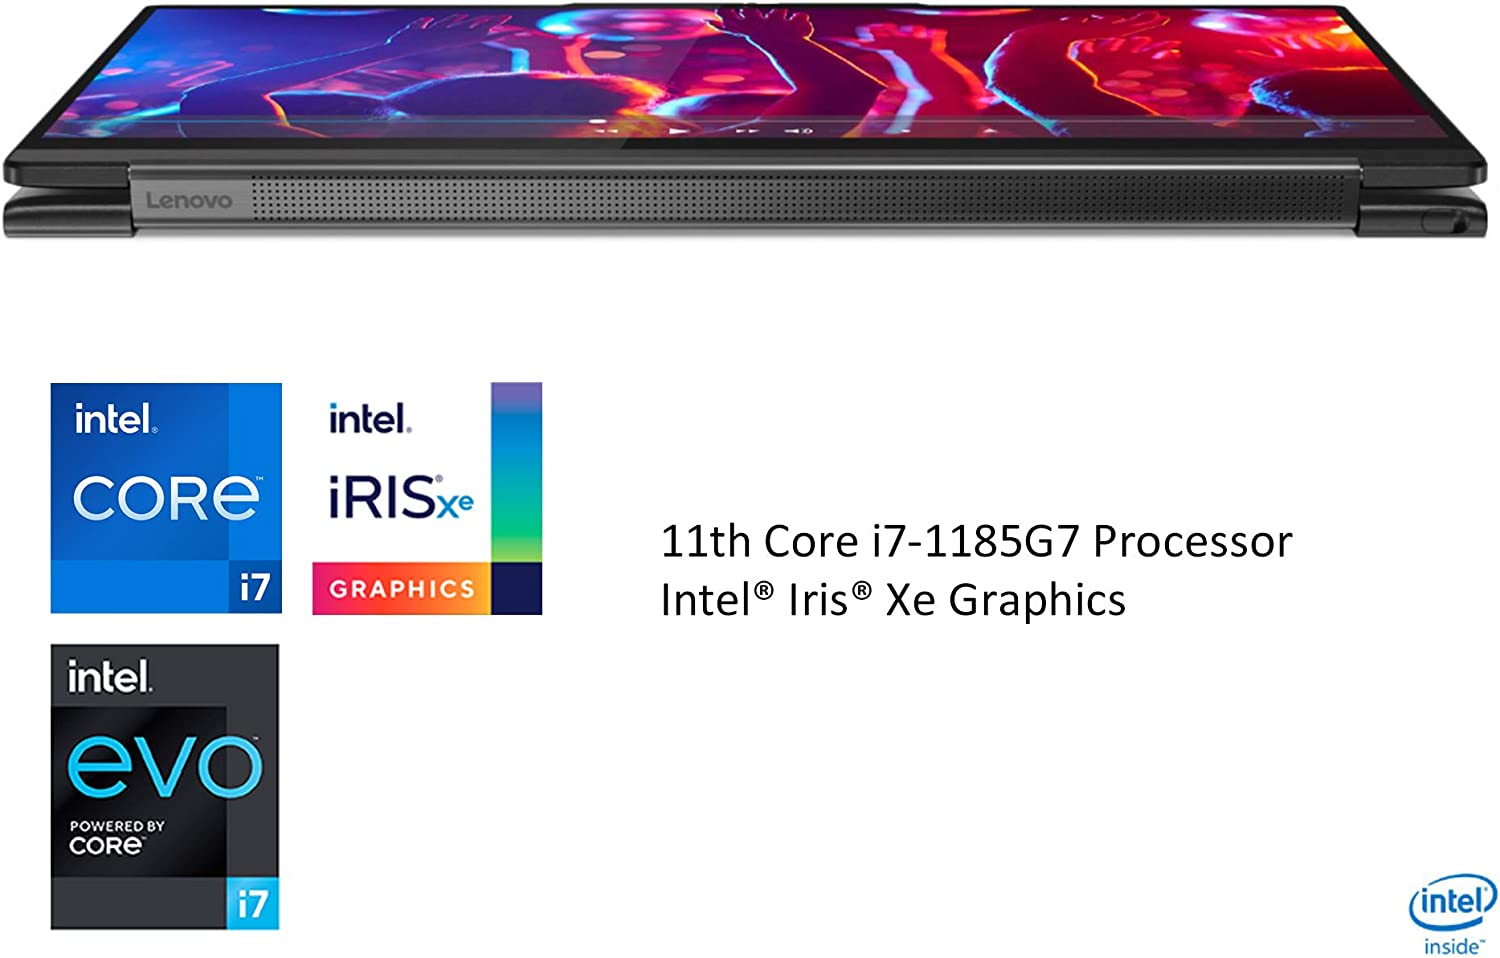 2021 Lenovo Yoga 9i - Intel Core i7, 16GB RAM, 512GB SSD